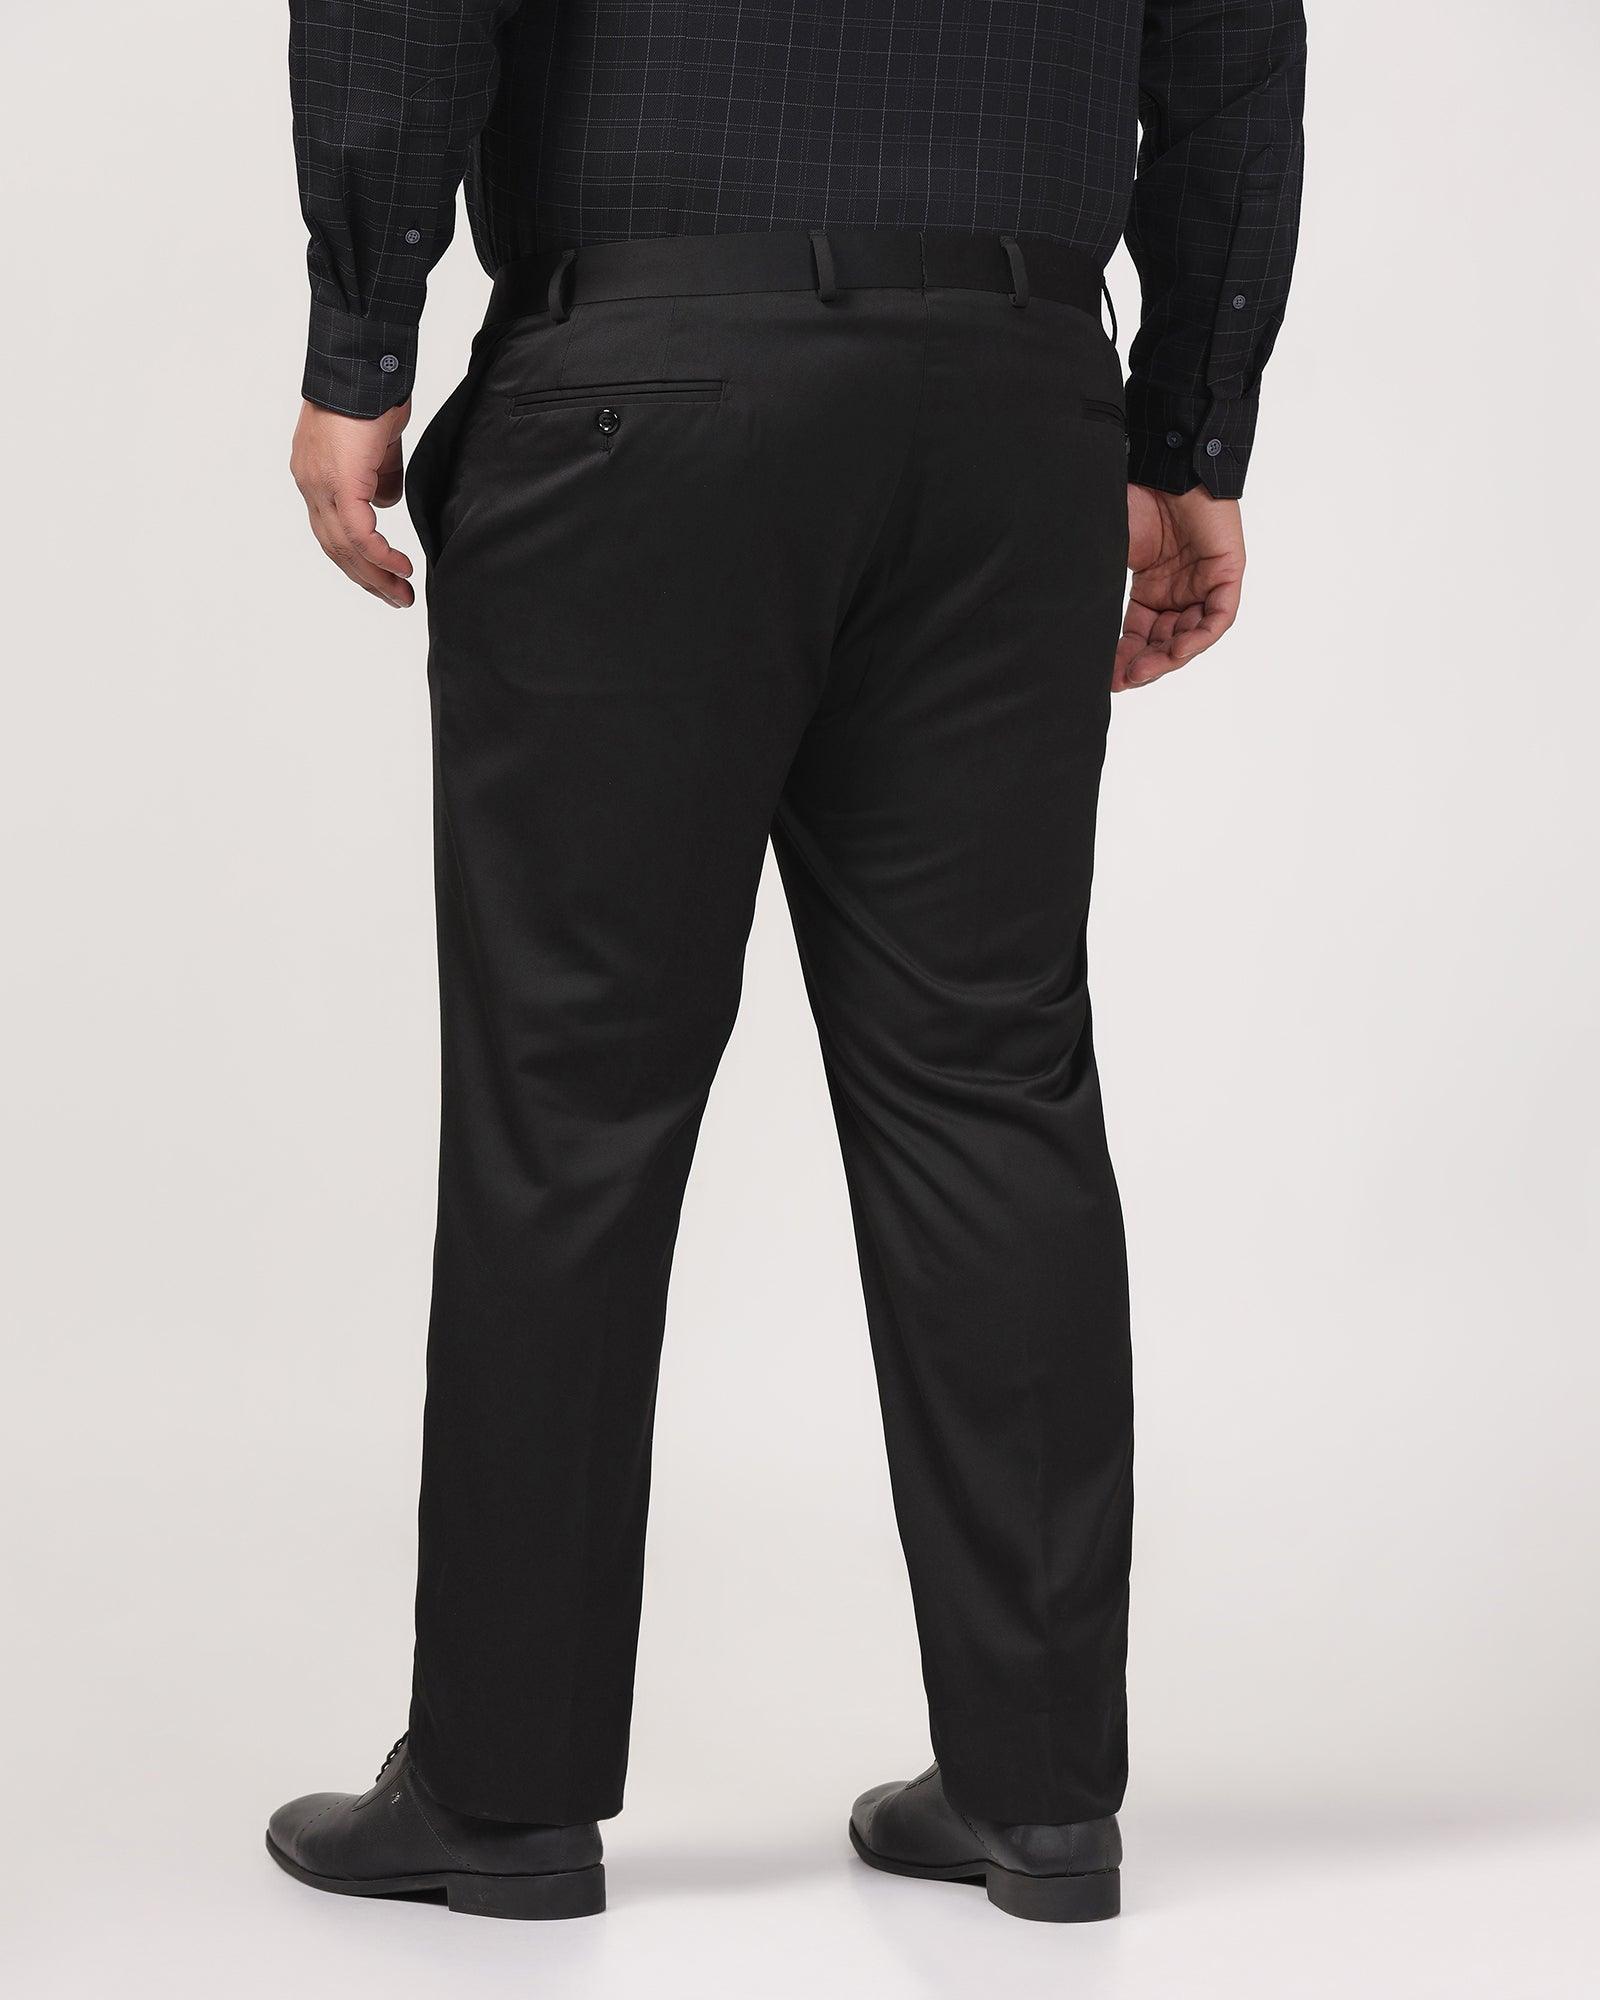 Must Haves Slim Comfort B-95 Formal Blackk Solid Trouser - Tisot